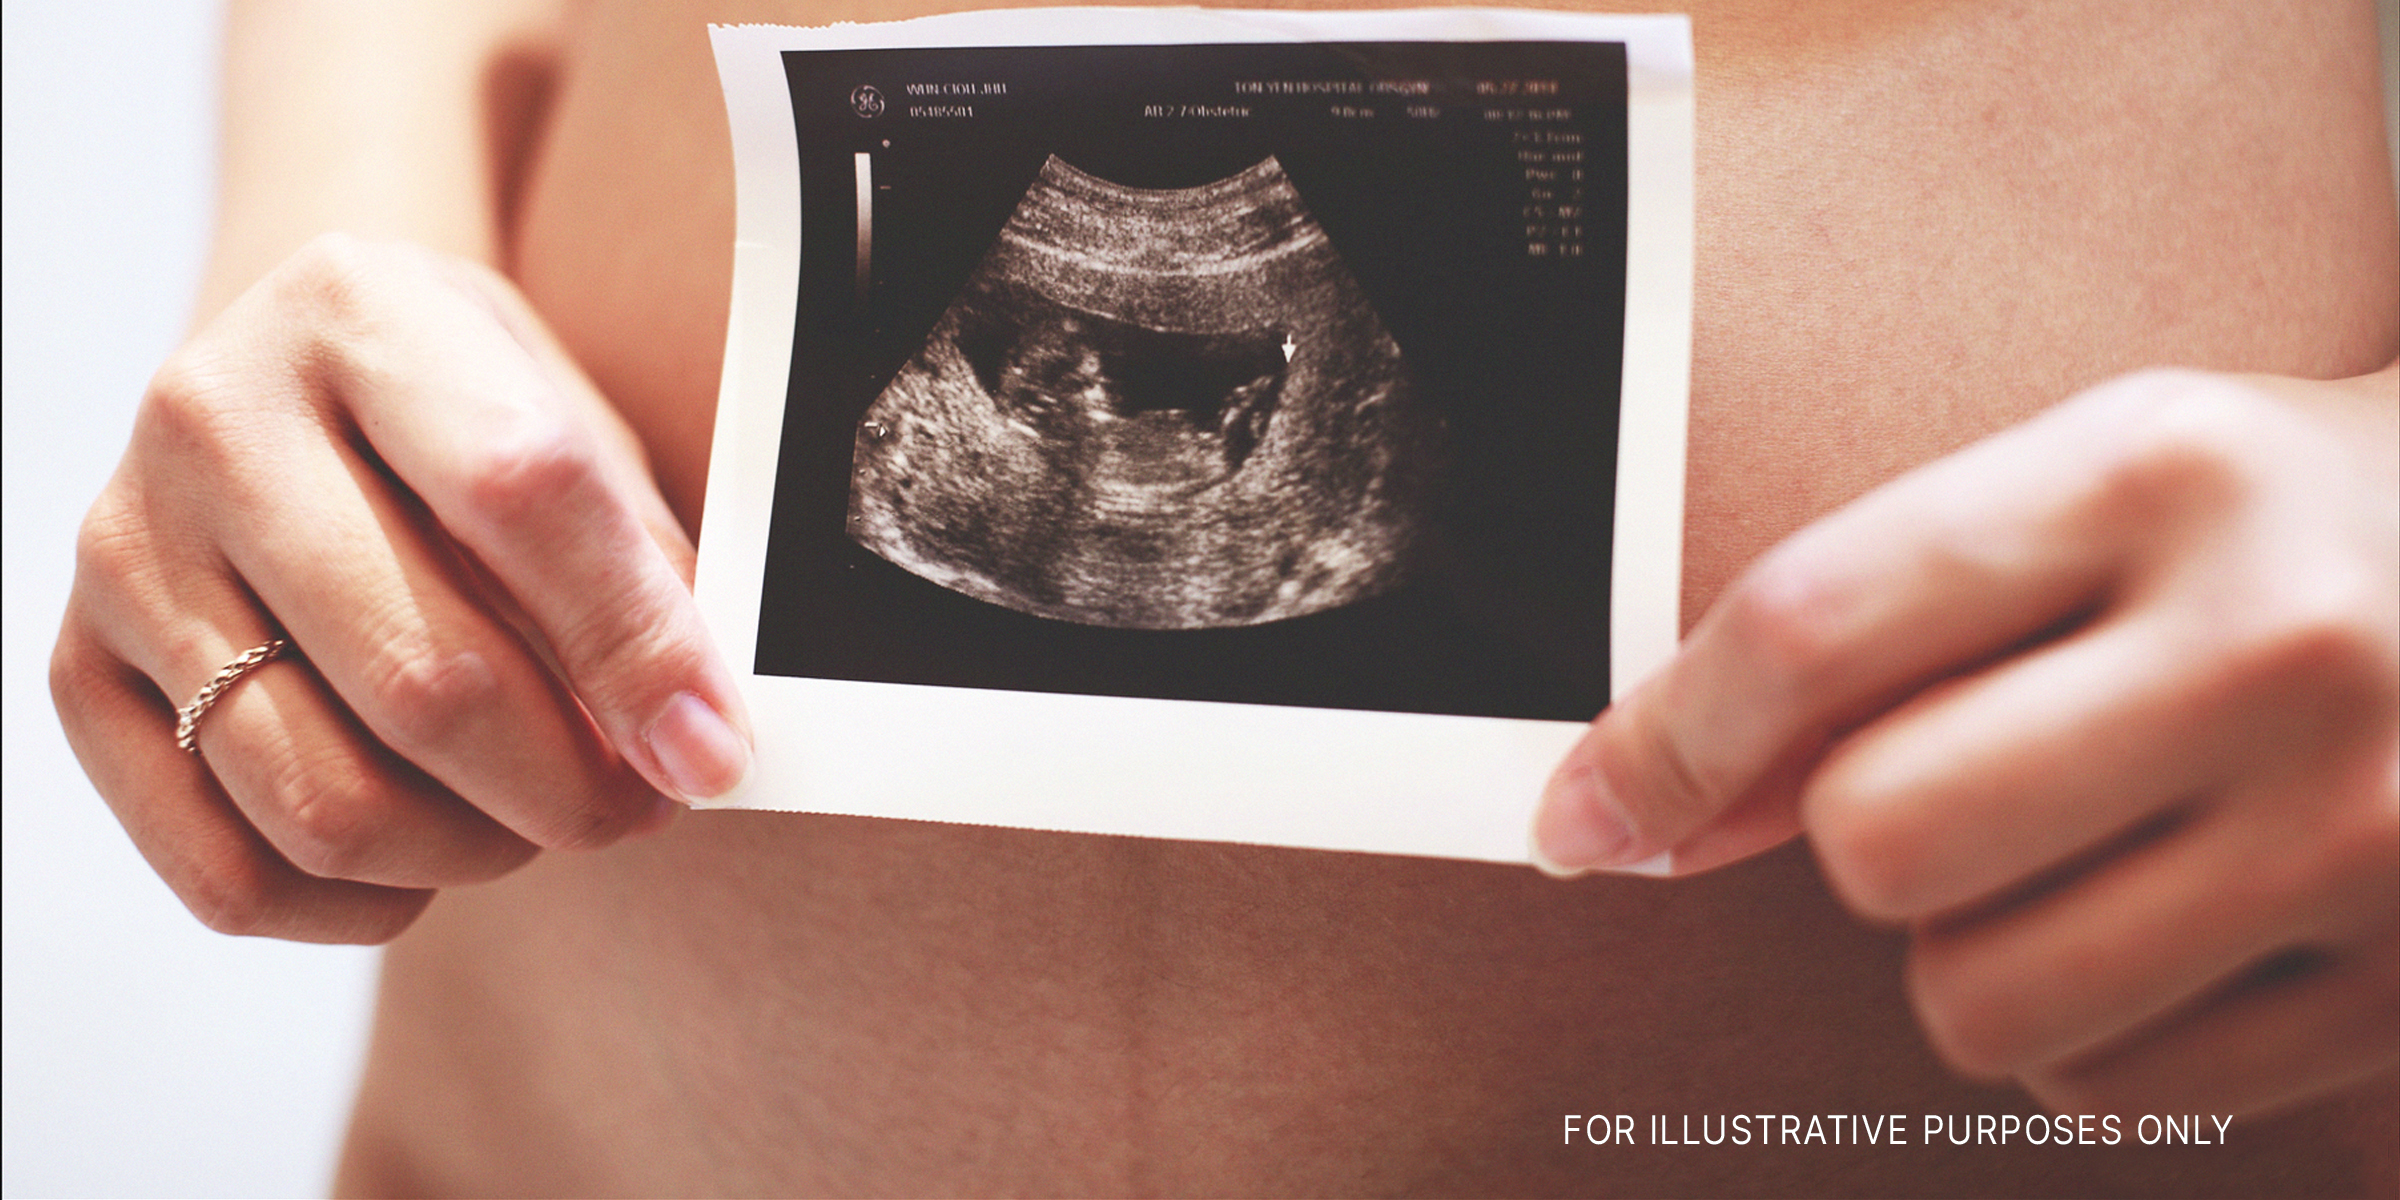 A woman holding an ultrasound scan | Source: Flickr.com